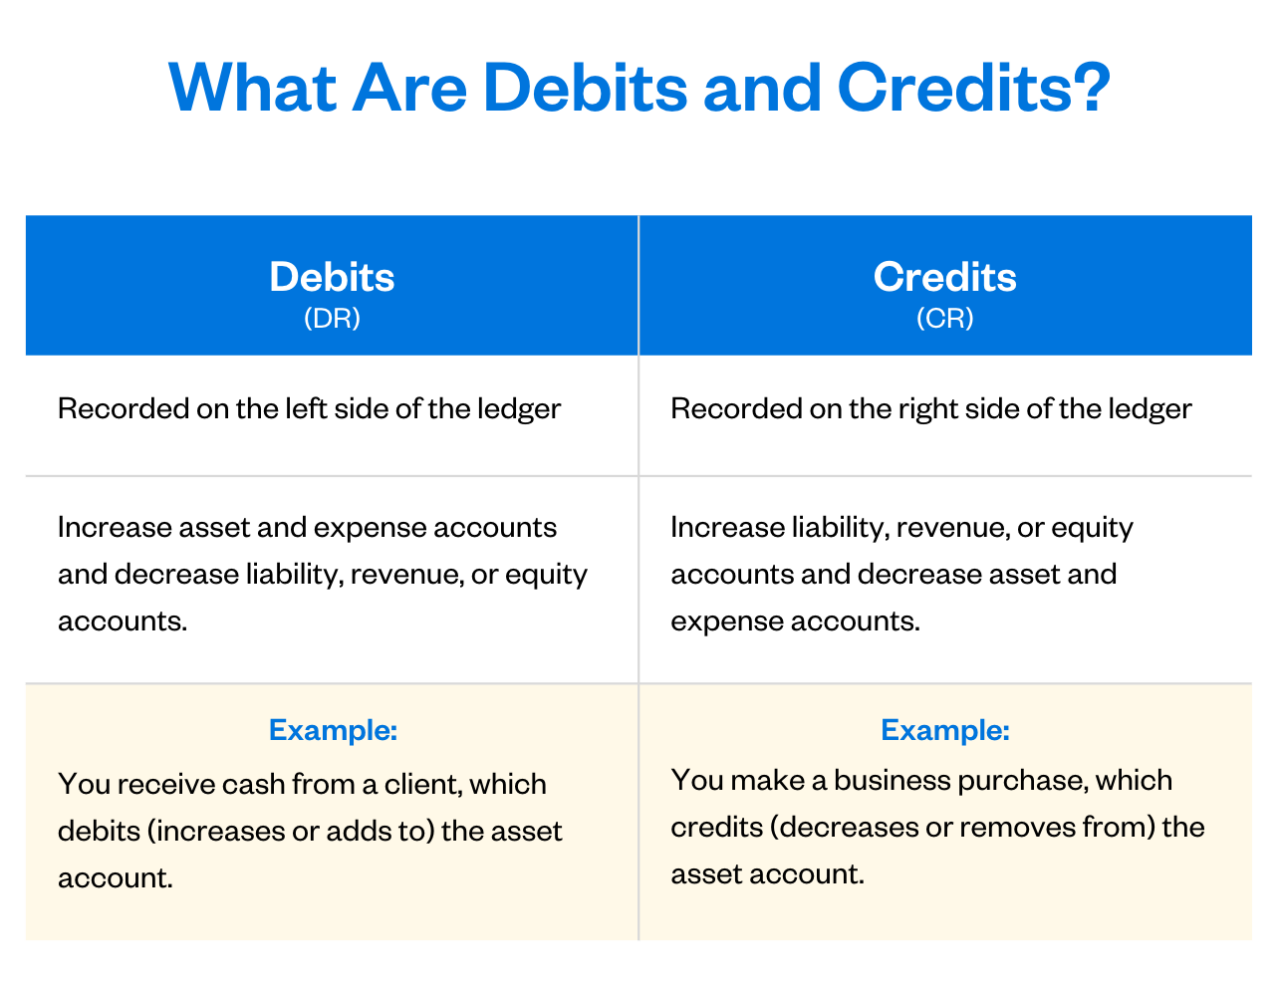 Illustration: debits vs credits in accounting